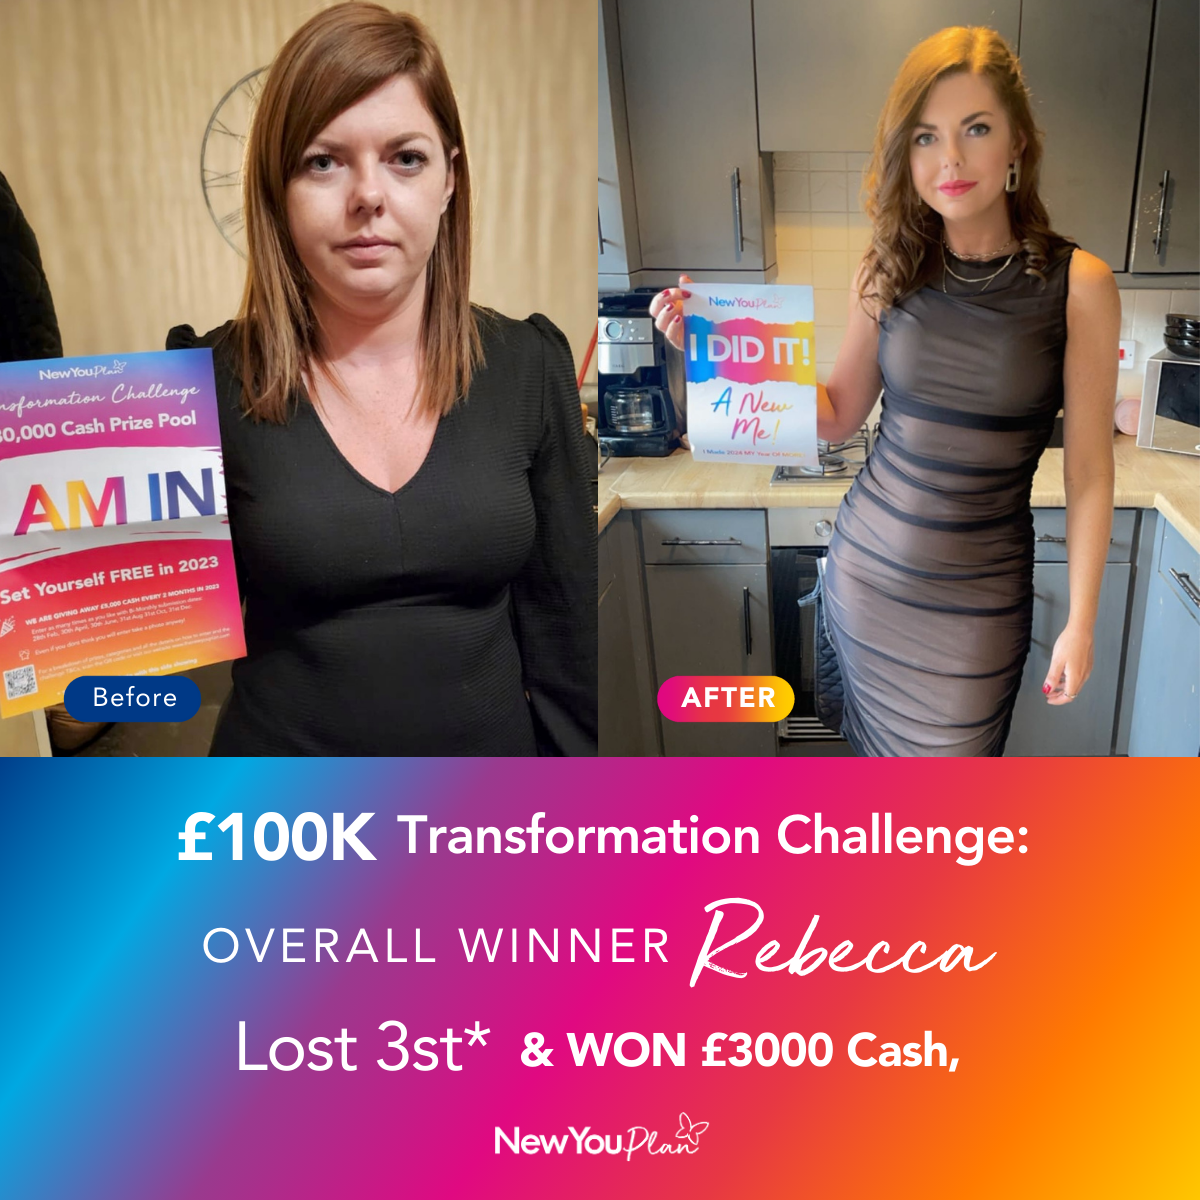 Rebecca_ Transformation Challenge Winner - Social Media - (1200 x 1200 px)1